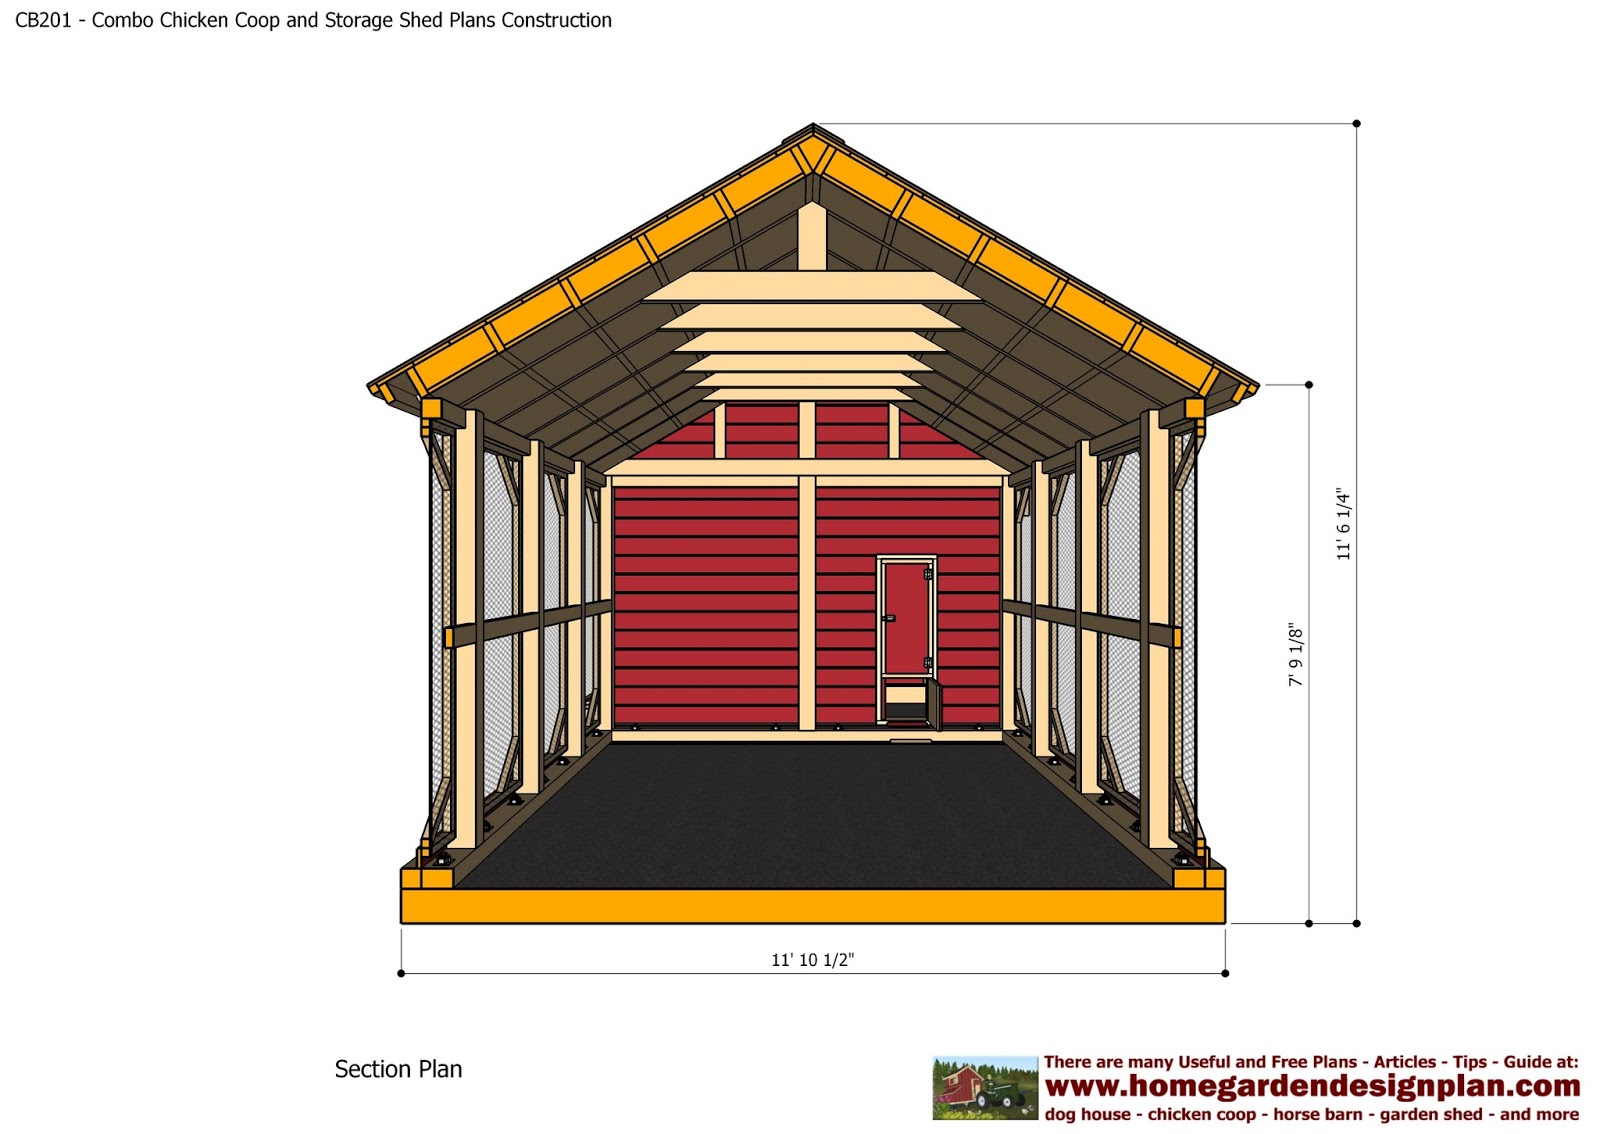 ... Plans - Chicken Coop Plans Construction + Garden Sheds Plans - Storage